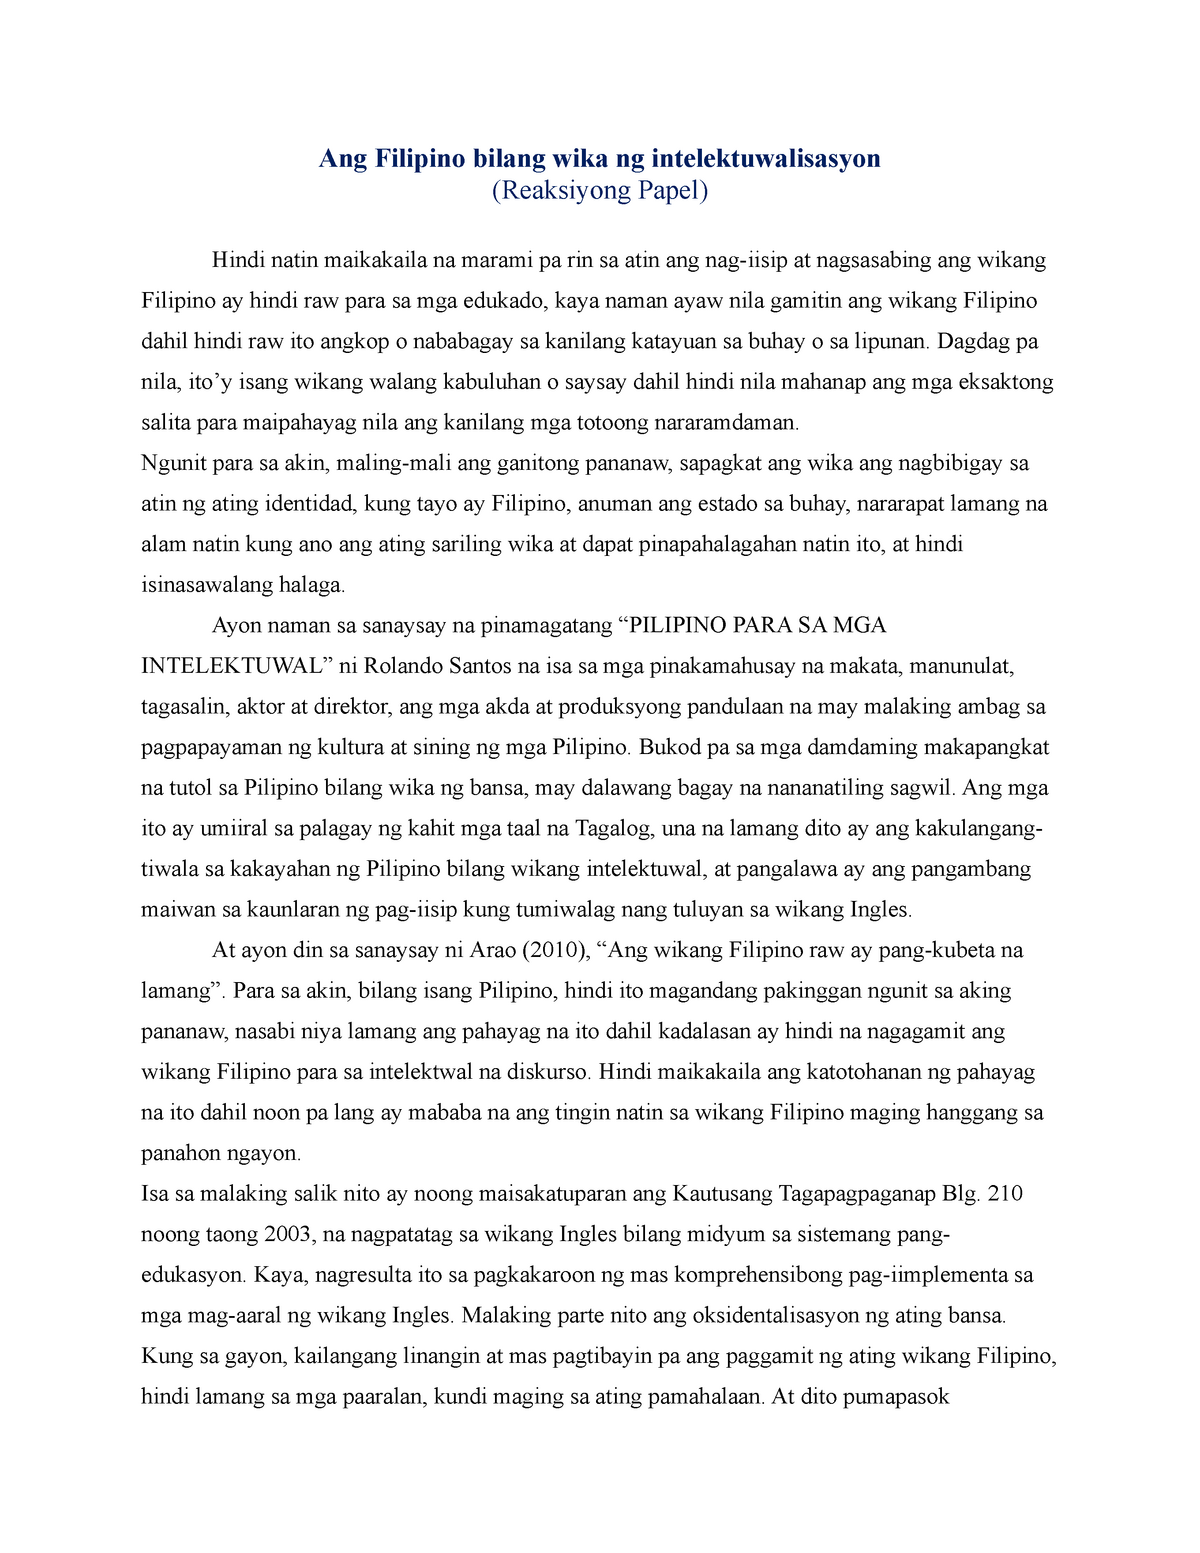 wikang filipino 500 words essay